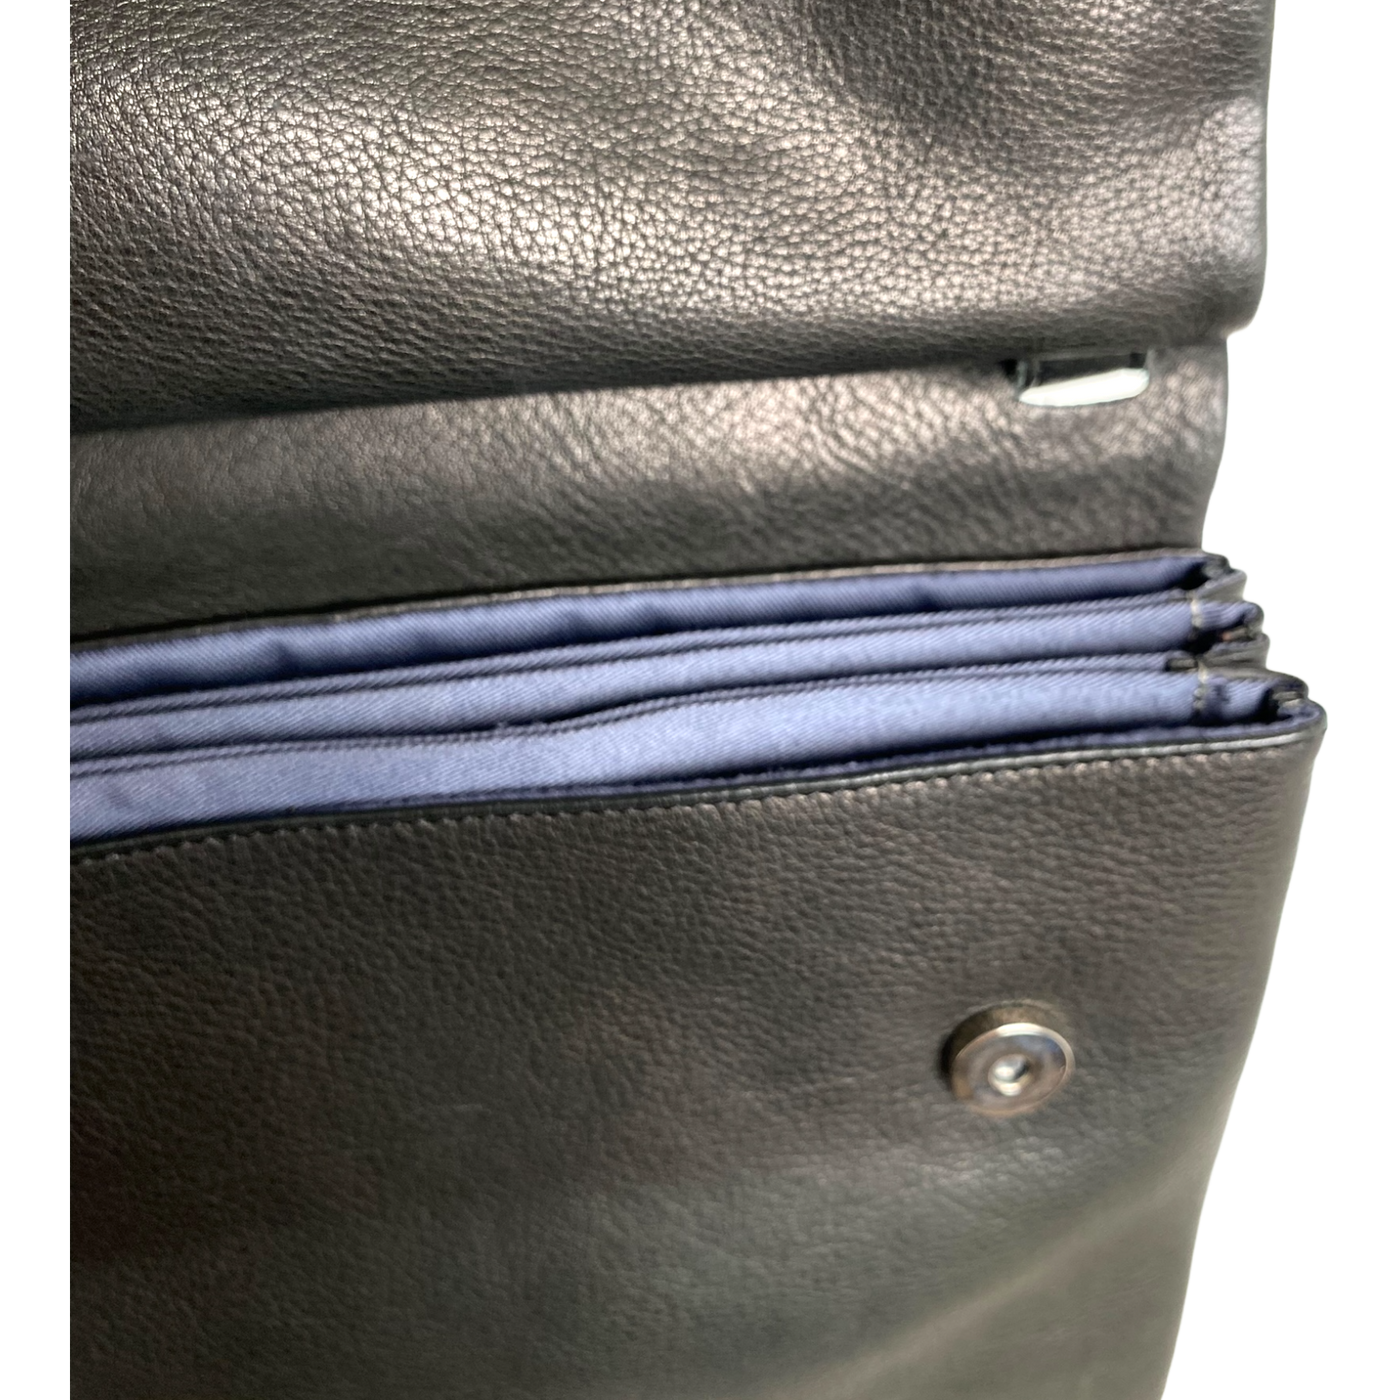 Harold's Bags leather chacoral smooth shoulder bag, black